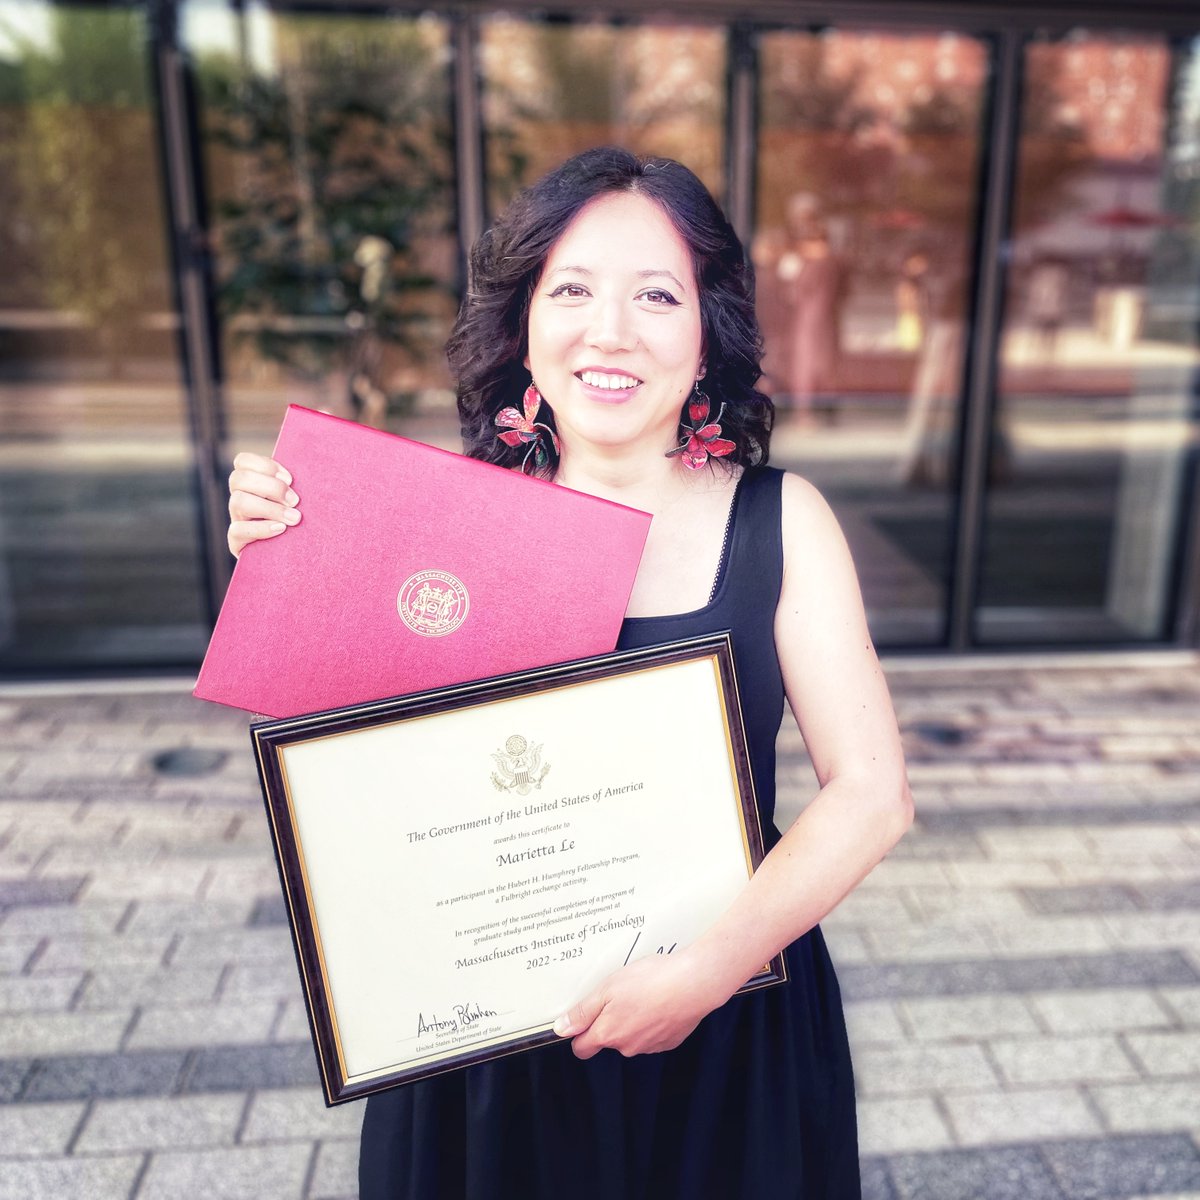 Congrats to @HumphreyProgram fellow @lemarietta '22 @MIT on her Certificate of Completion of a program of graduate study & professional development @MITdusp #Fulbright #HumphreyFellows dusp.mit.edu/spurs-fellows/…